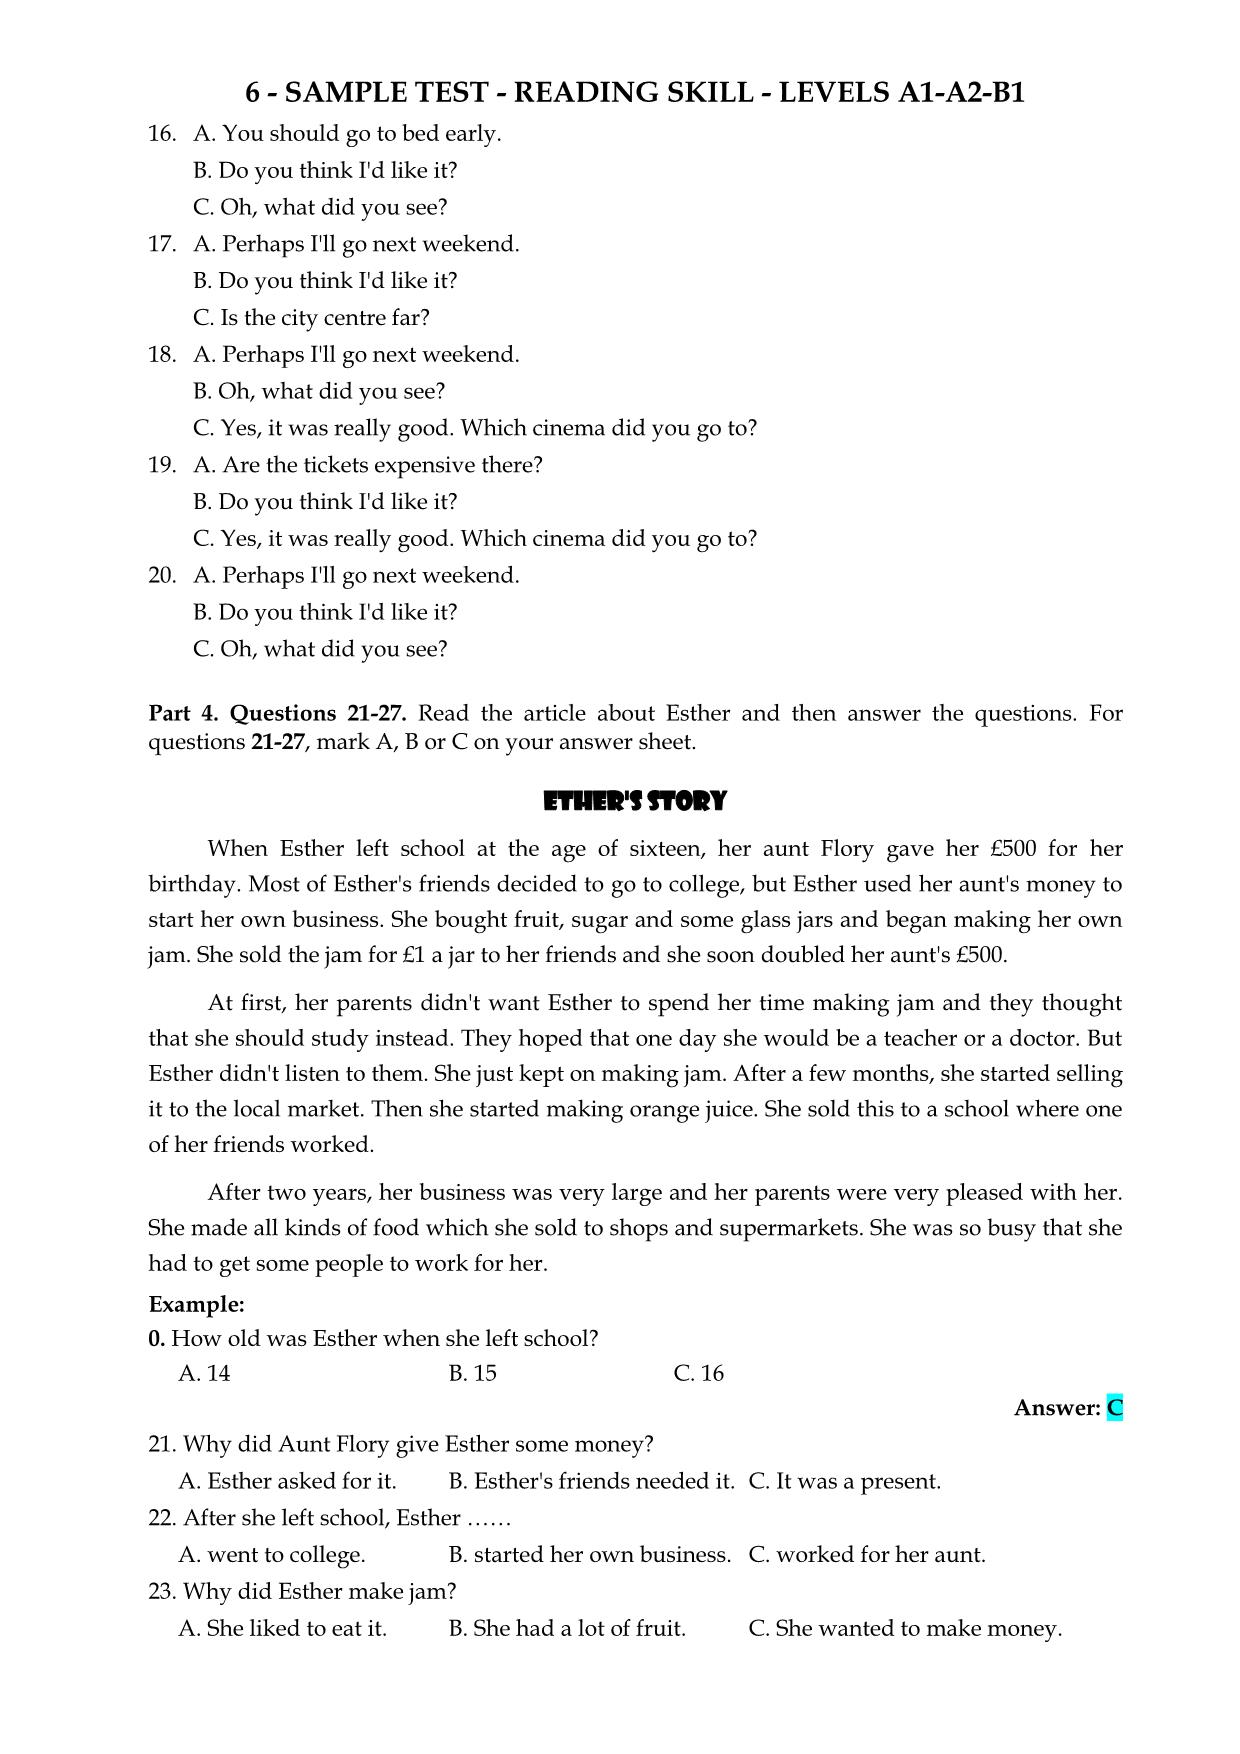 Sample test - Reading skill - levels A1 - A2 - B1 trang 3